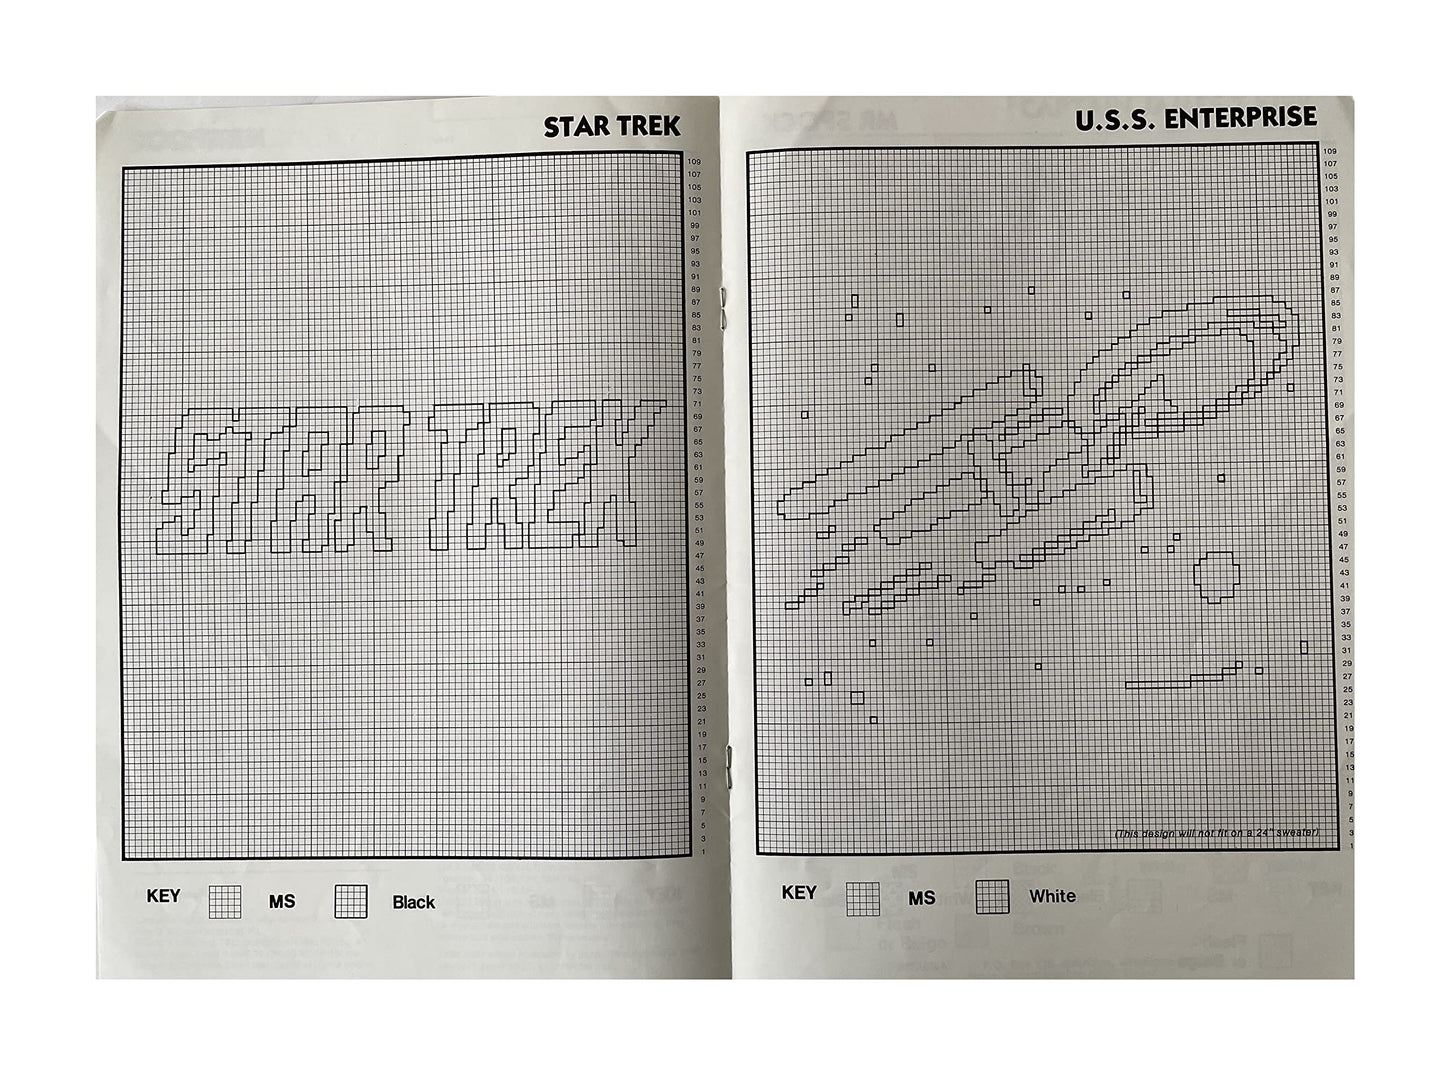 Vintage 1987 Star Trek The Original Series 5 Knitting Patterns Magazine - Brand New Shop Stock Room Find